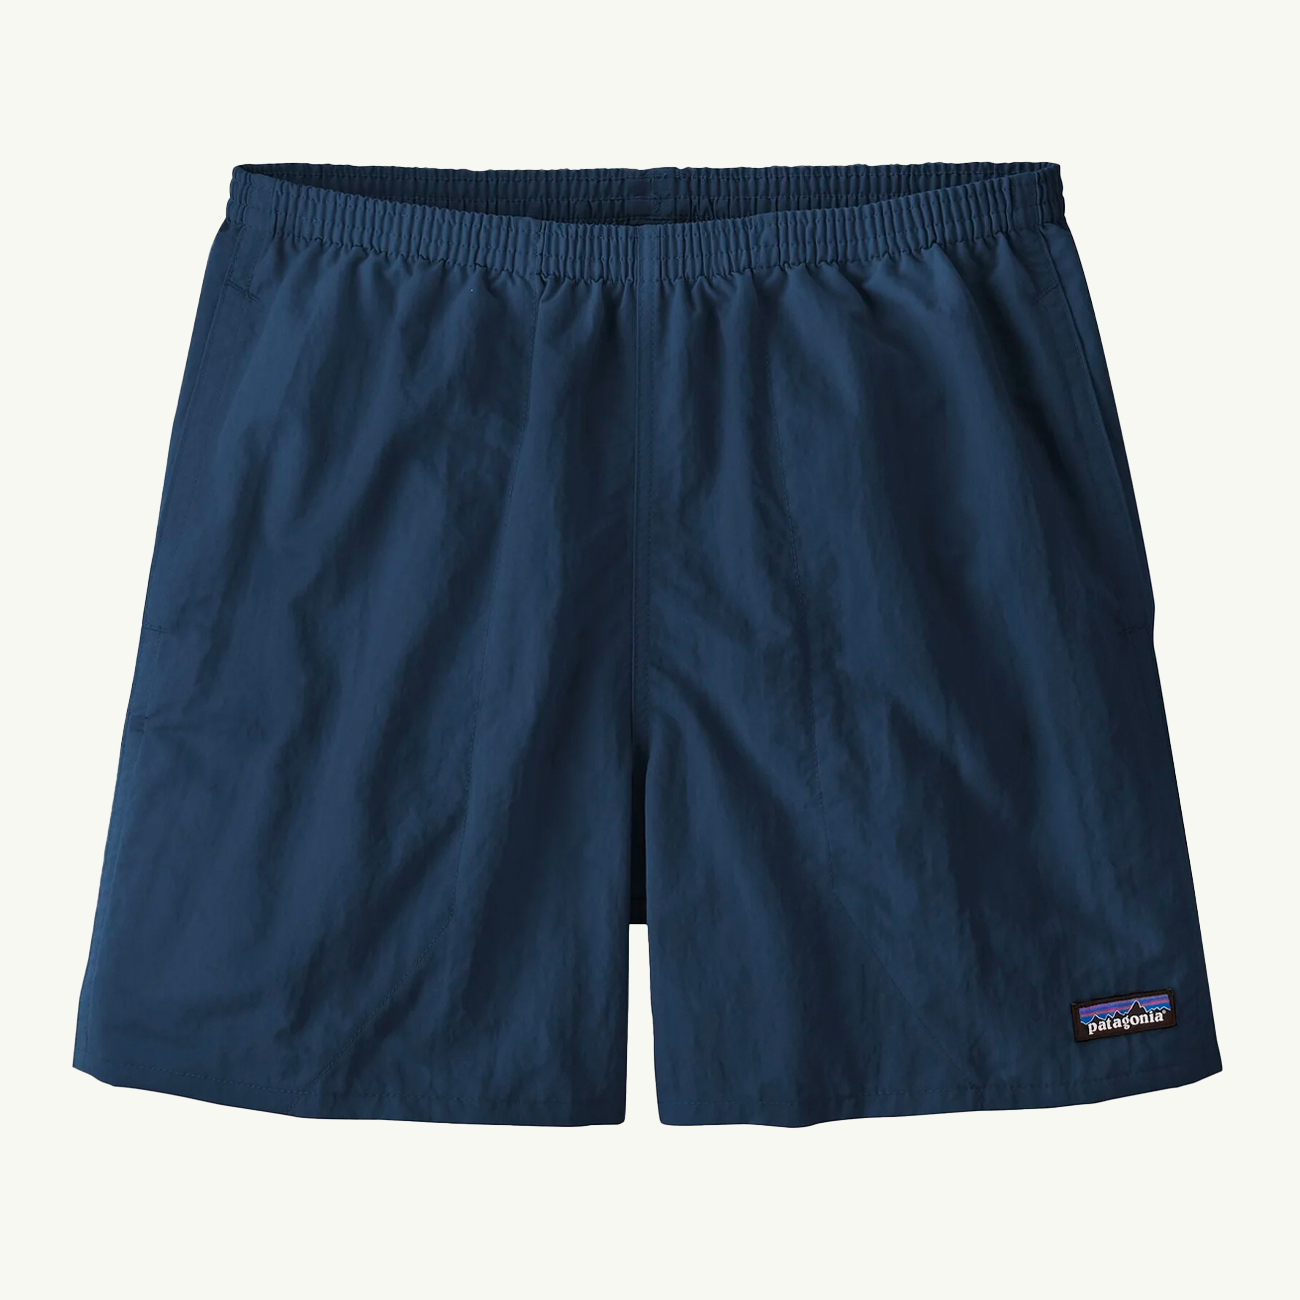 Baggies Shorts 5" - Tidepool Blue